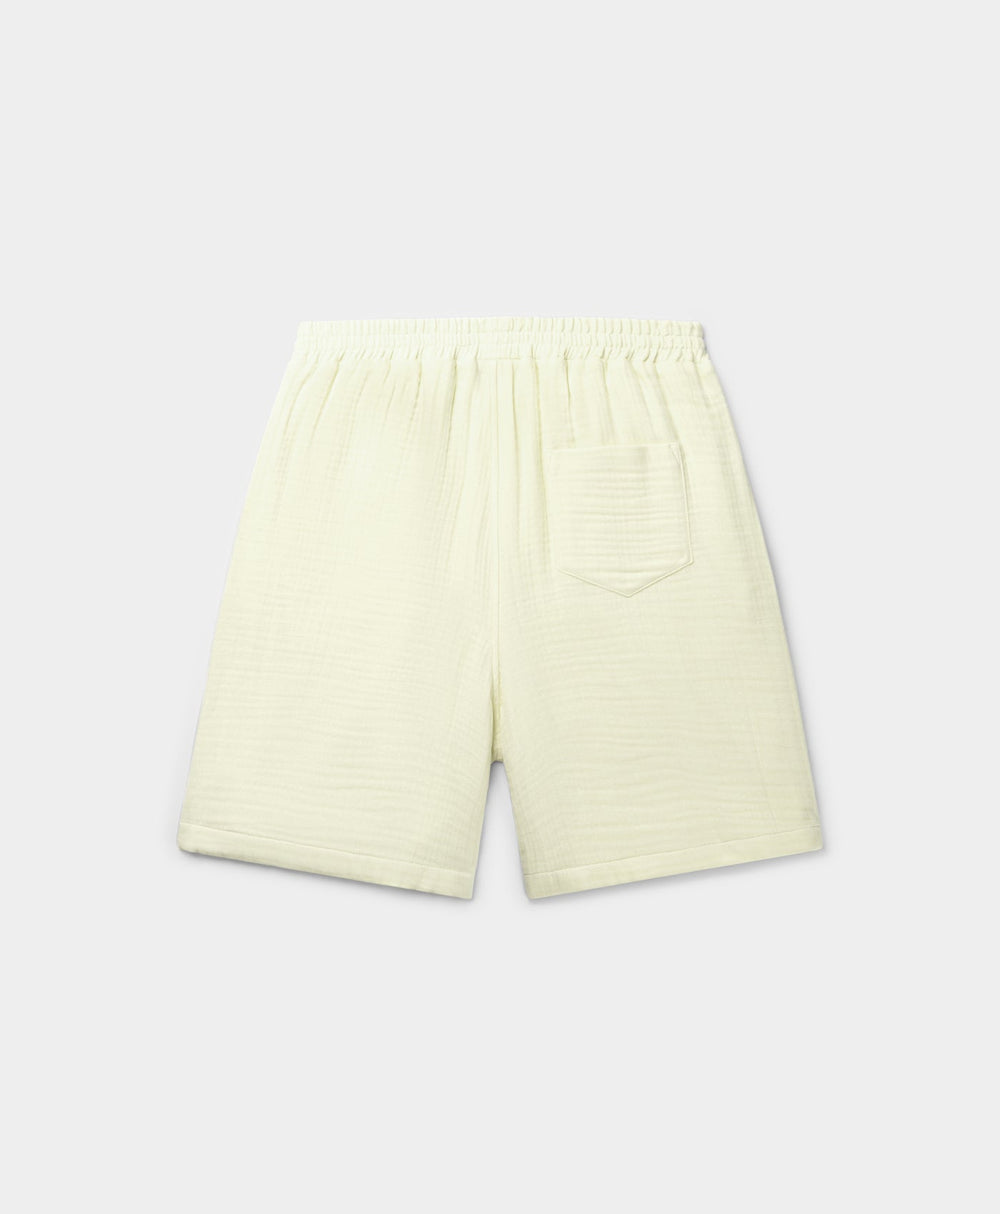 DP - Icing Yellow Enzi Seersucker Shorts - Packshot - Rear